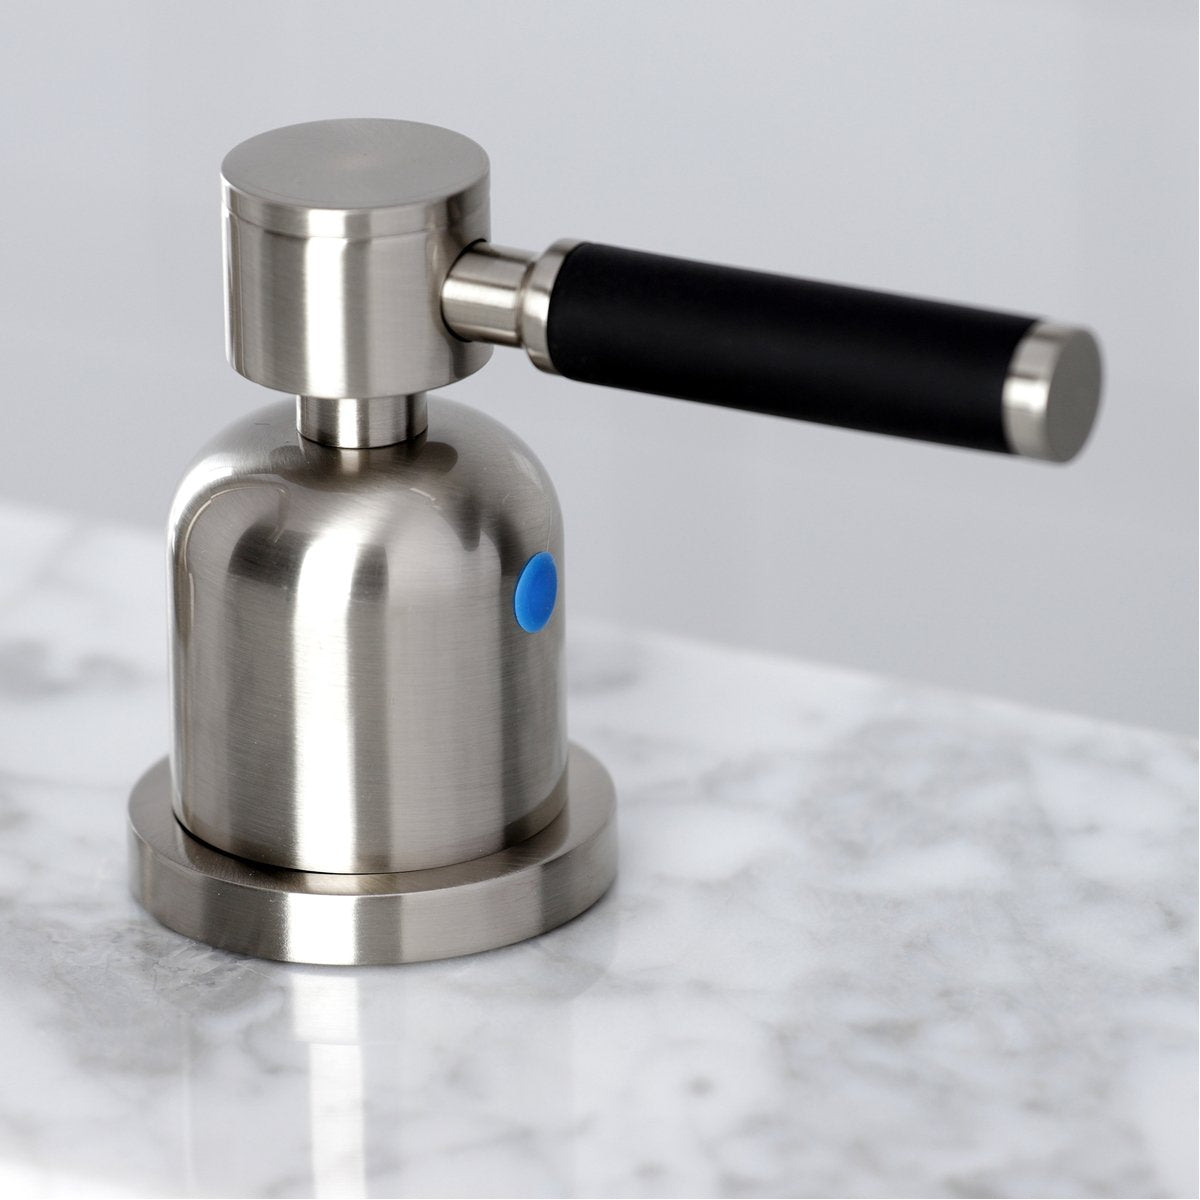 Kingston Brass Kaiser Widespread Bathroom Faucet with Brass Pop-Up